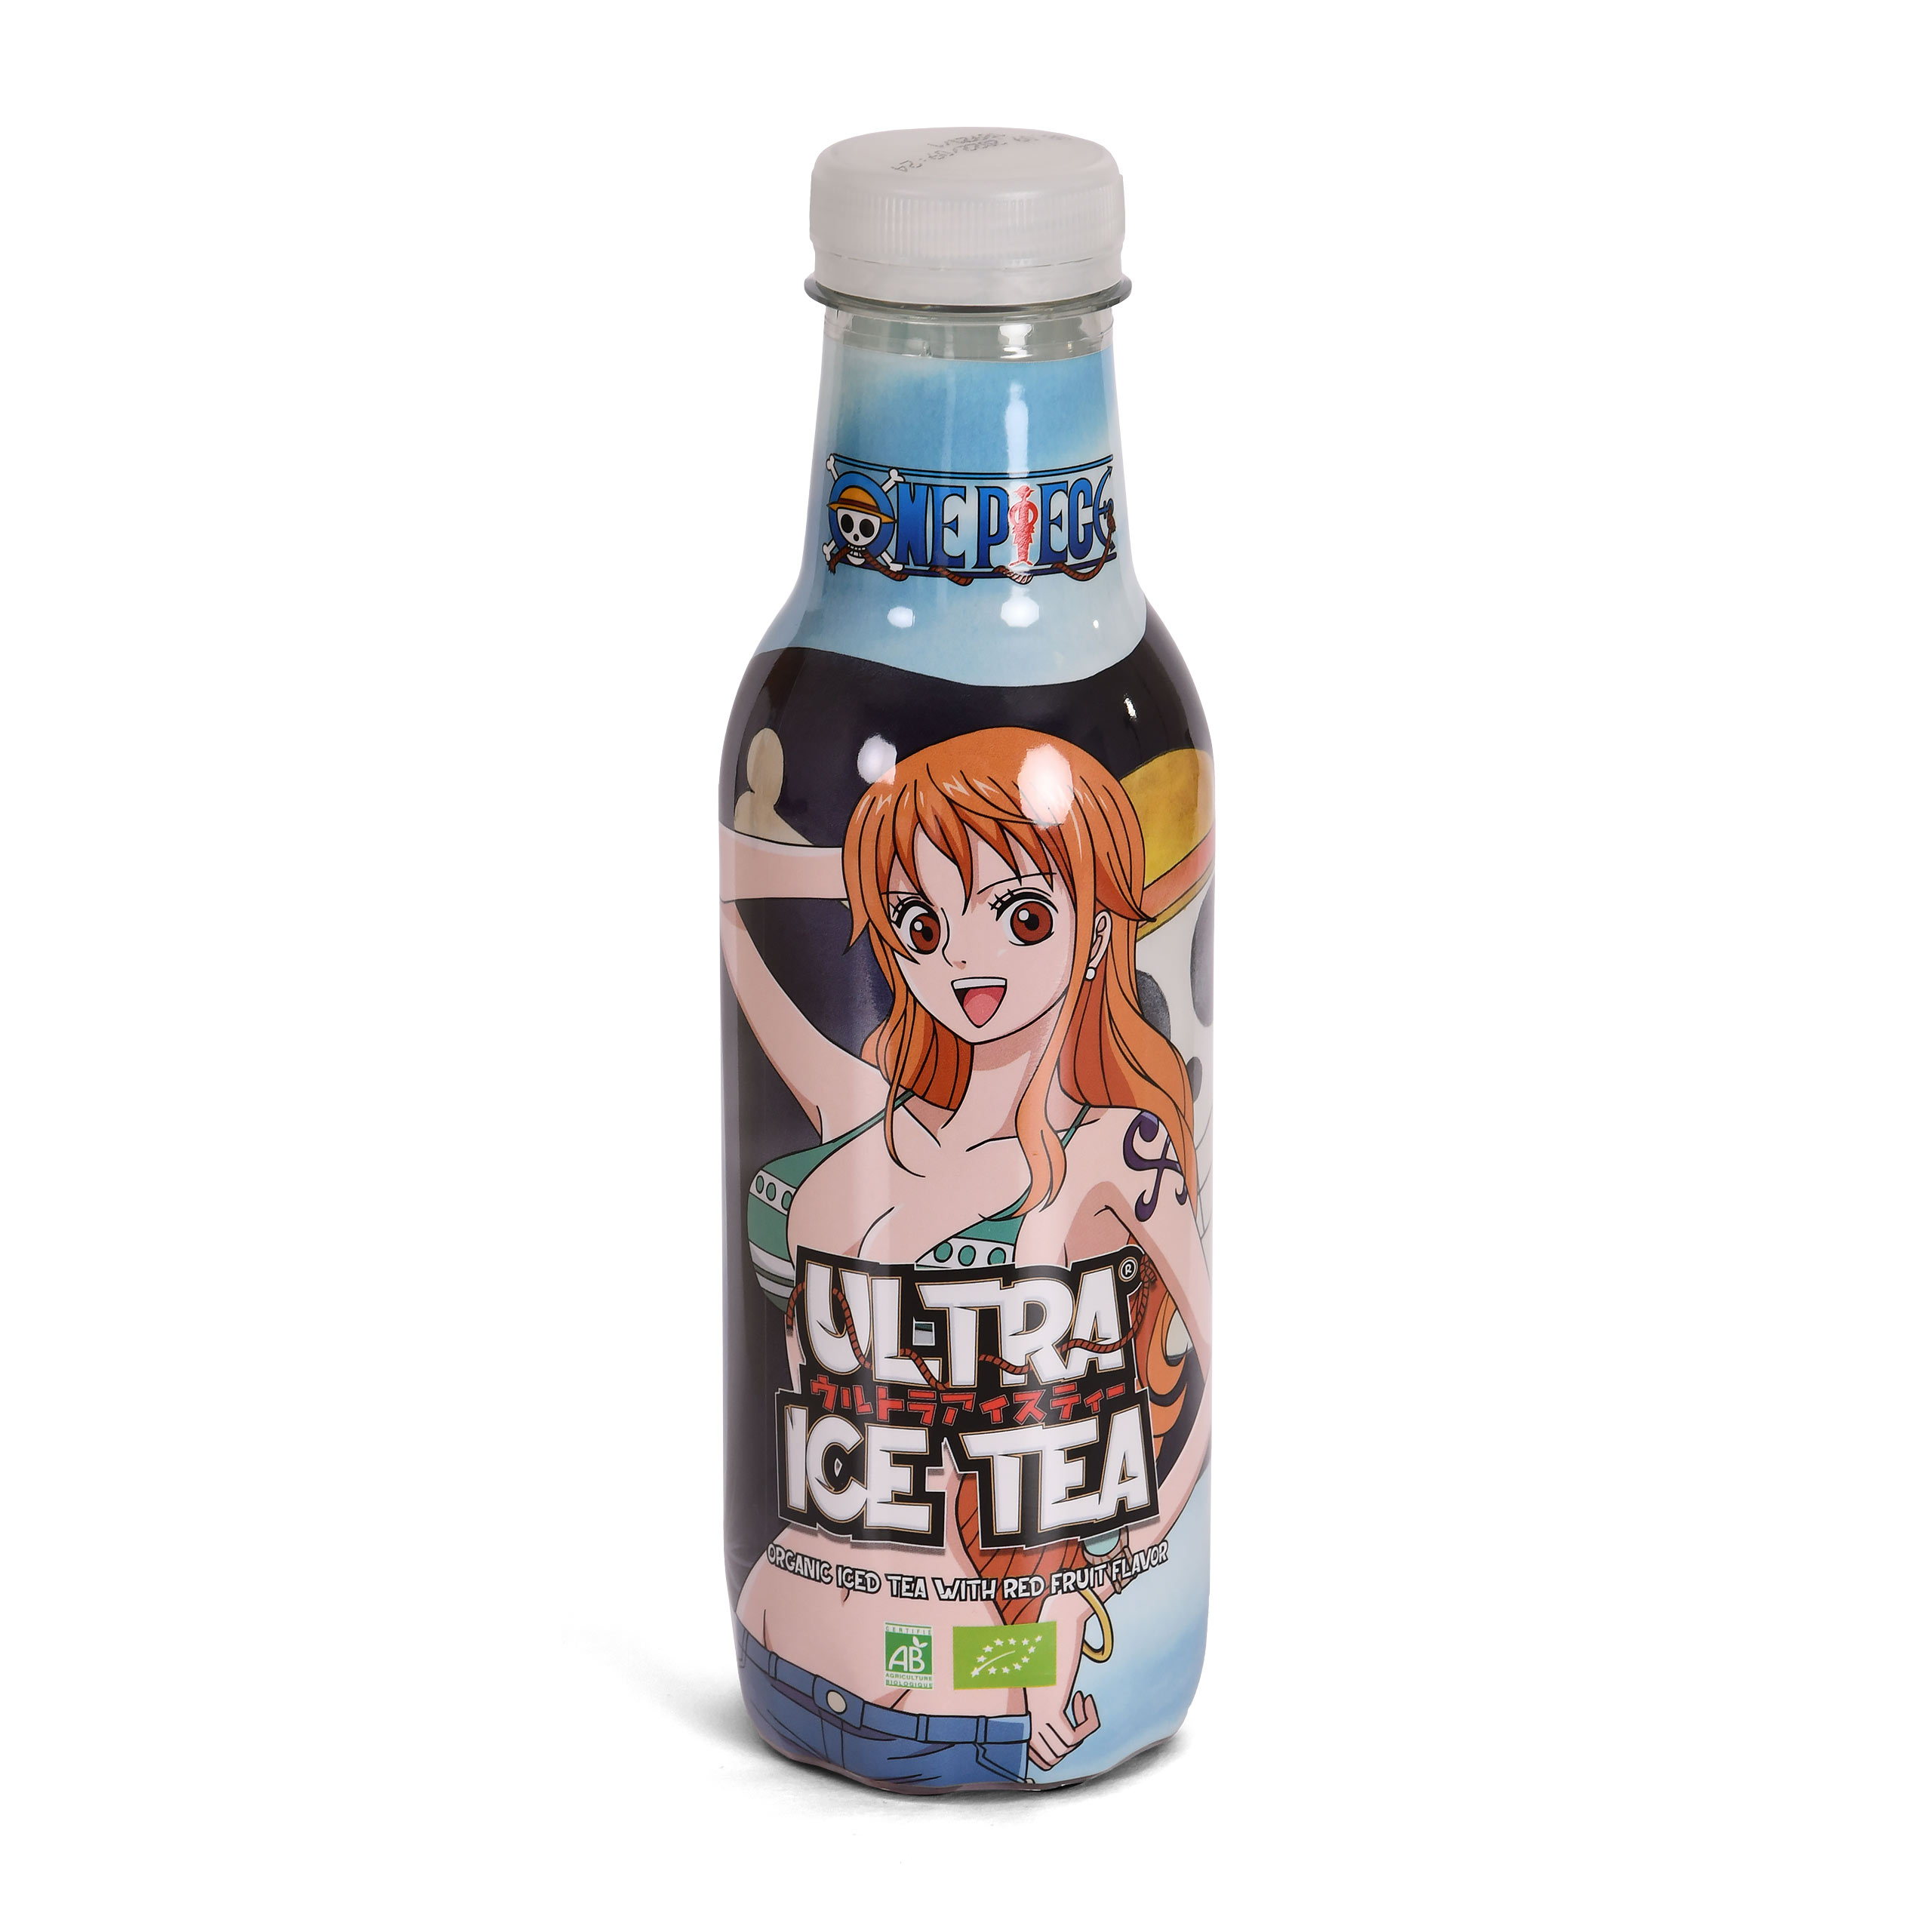 One Piece - Nami Ultra thé glacé bio fruits rouges paquet de 12